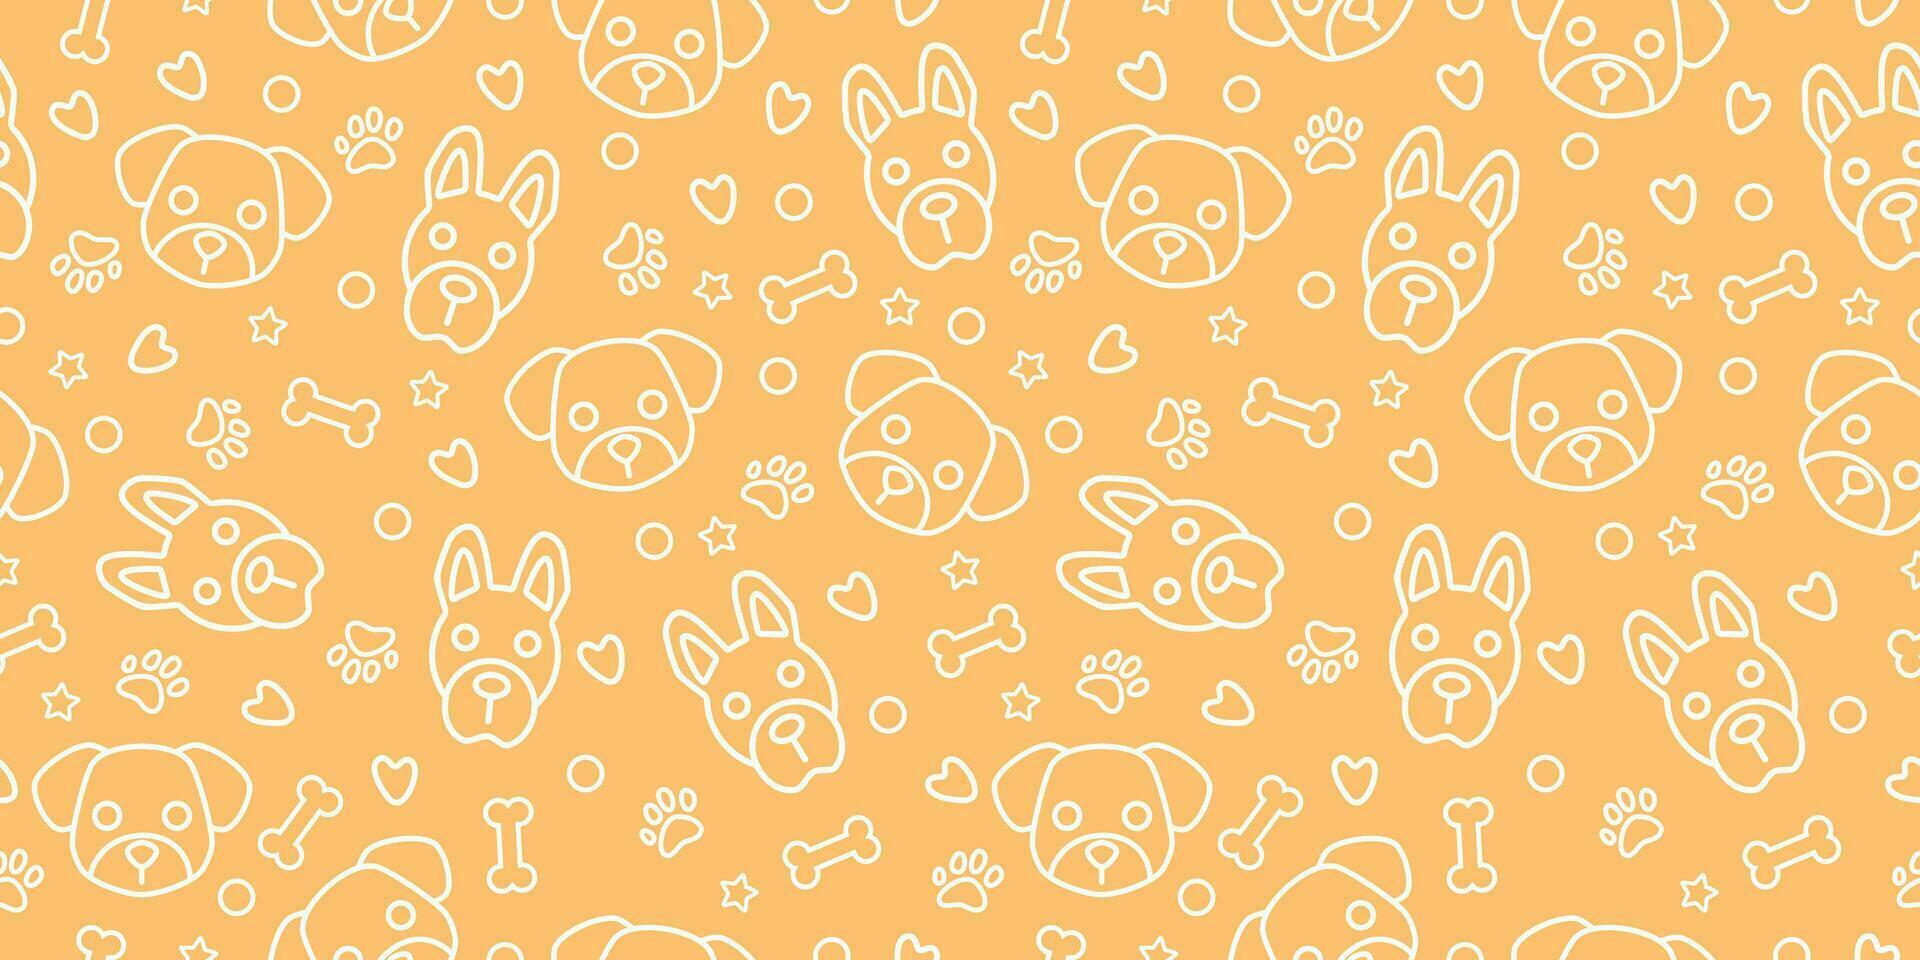 dog seamless pattern with footprint, paw, hearts, bones, balls, stars, pet shop, prints, social media posts, animal product design, hand drawn, kawaii doodle style, vector illustration